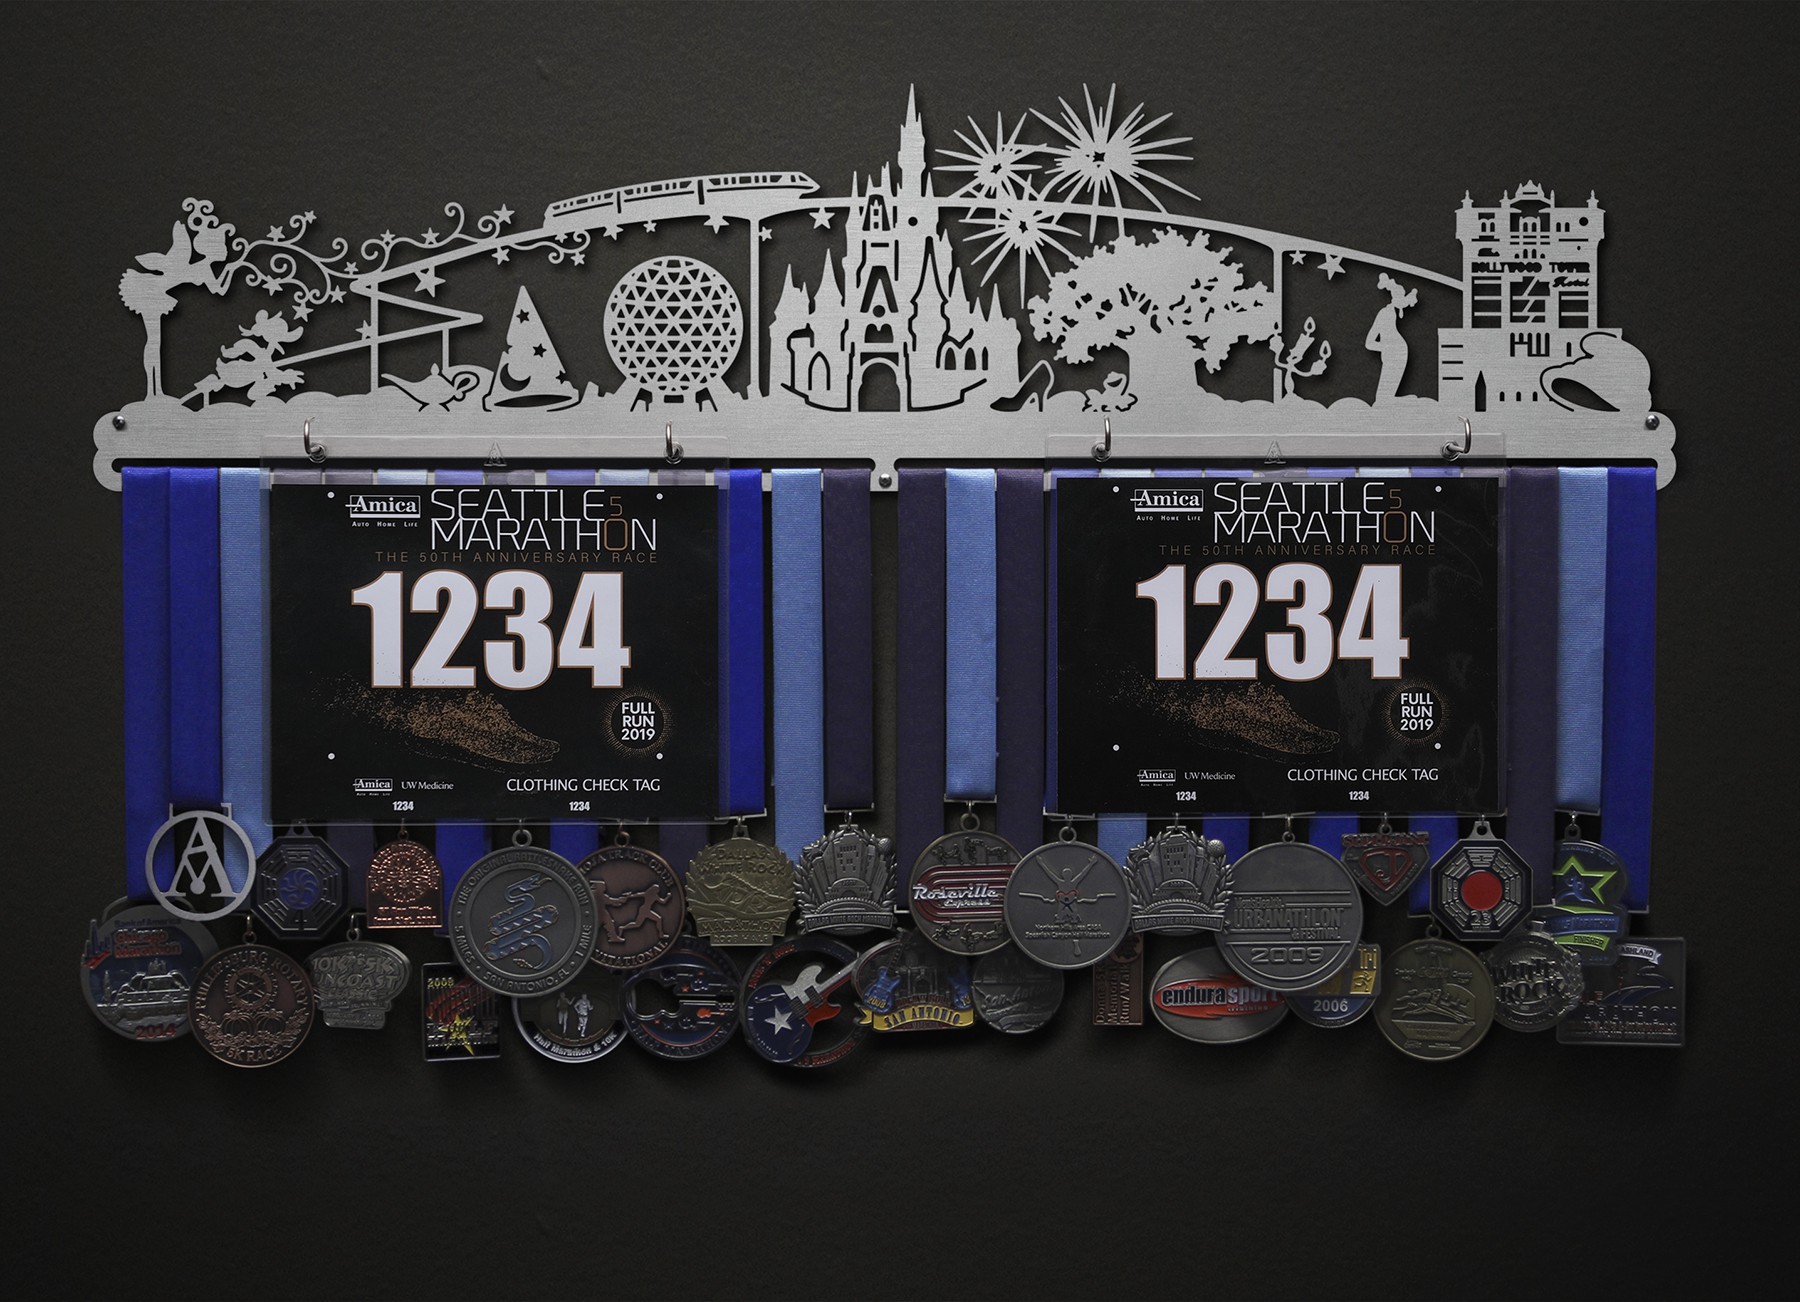 Magic World Bib and Medal Display